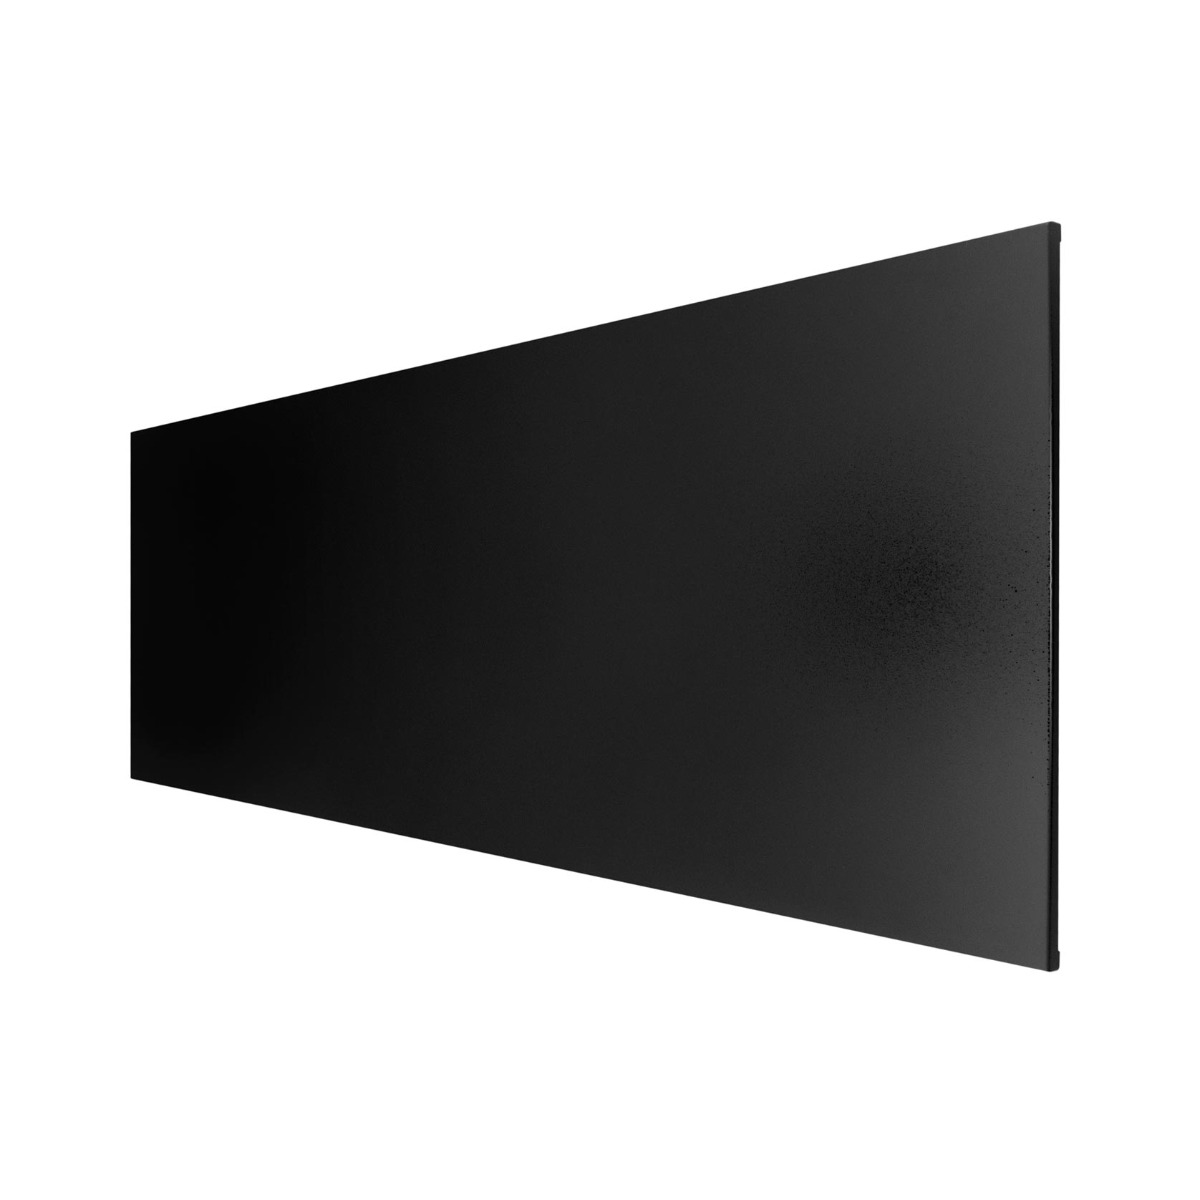 Technotherm ISP Frameless Infrared Heating Panel - Black 500w (1200 x 400mm)